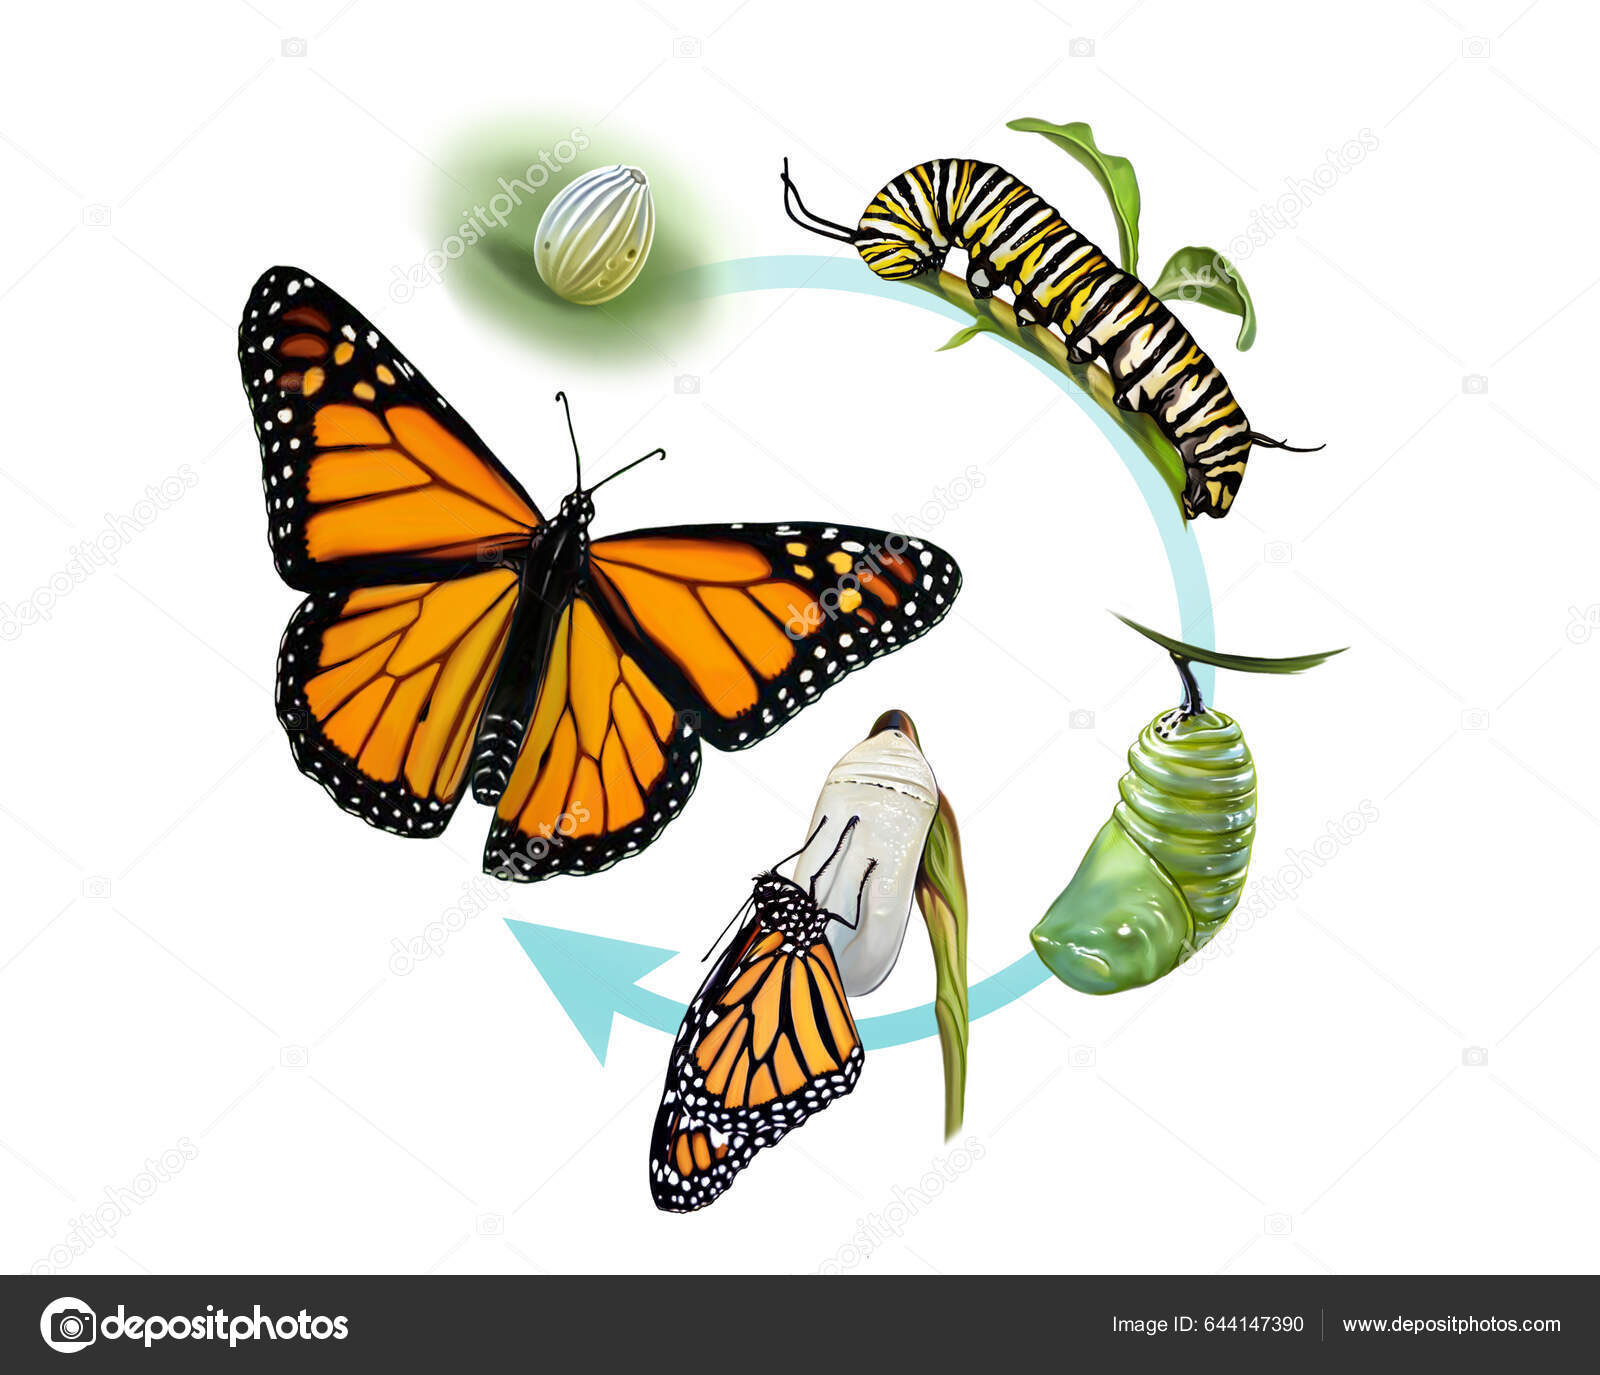 Desenho realista - O gato e a borboleta! The cat and the butterfly!   Desenhos de animais realistas, Desenho realista, Desenhos realistas